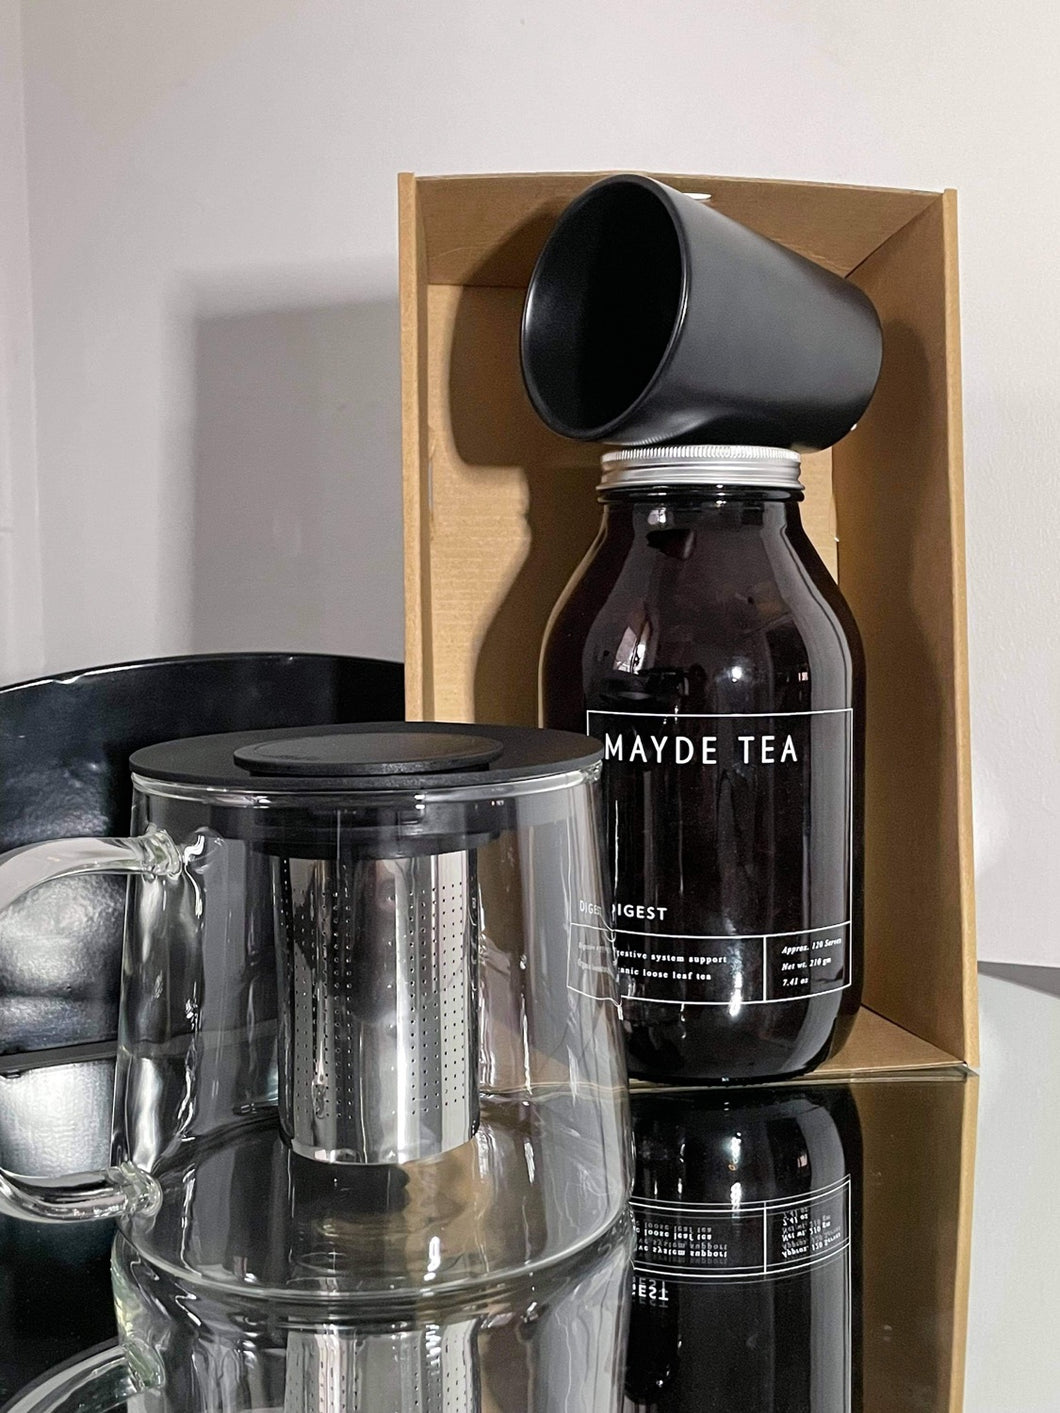 Tea Lover kit with Large amber jar of MAYDE TEA